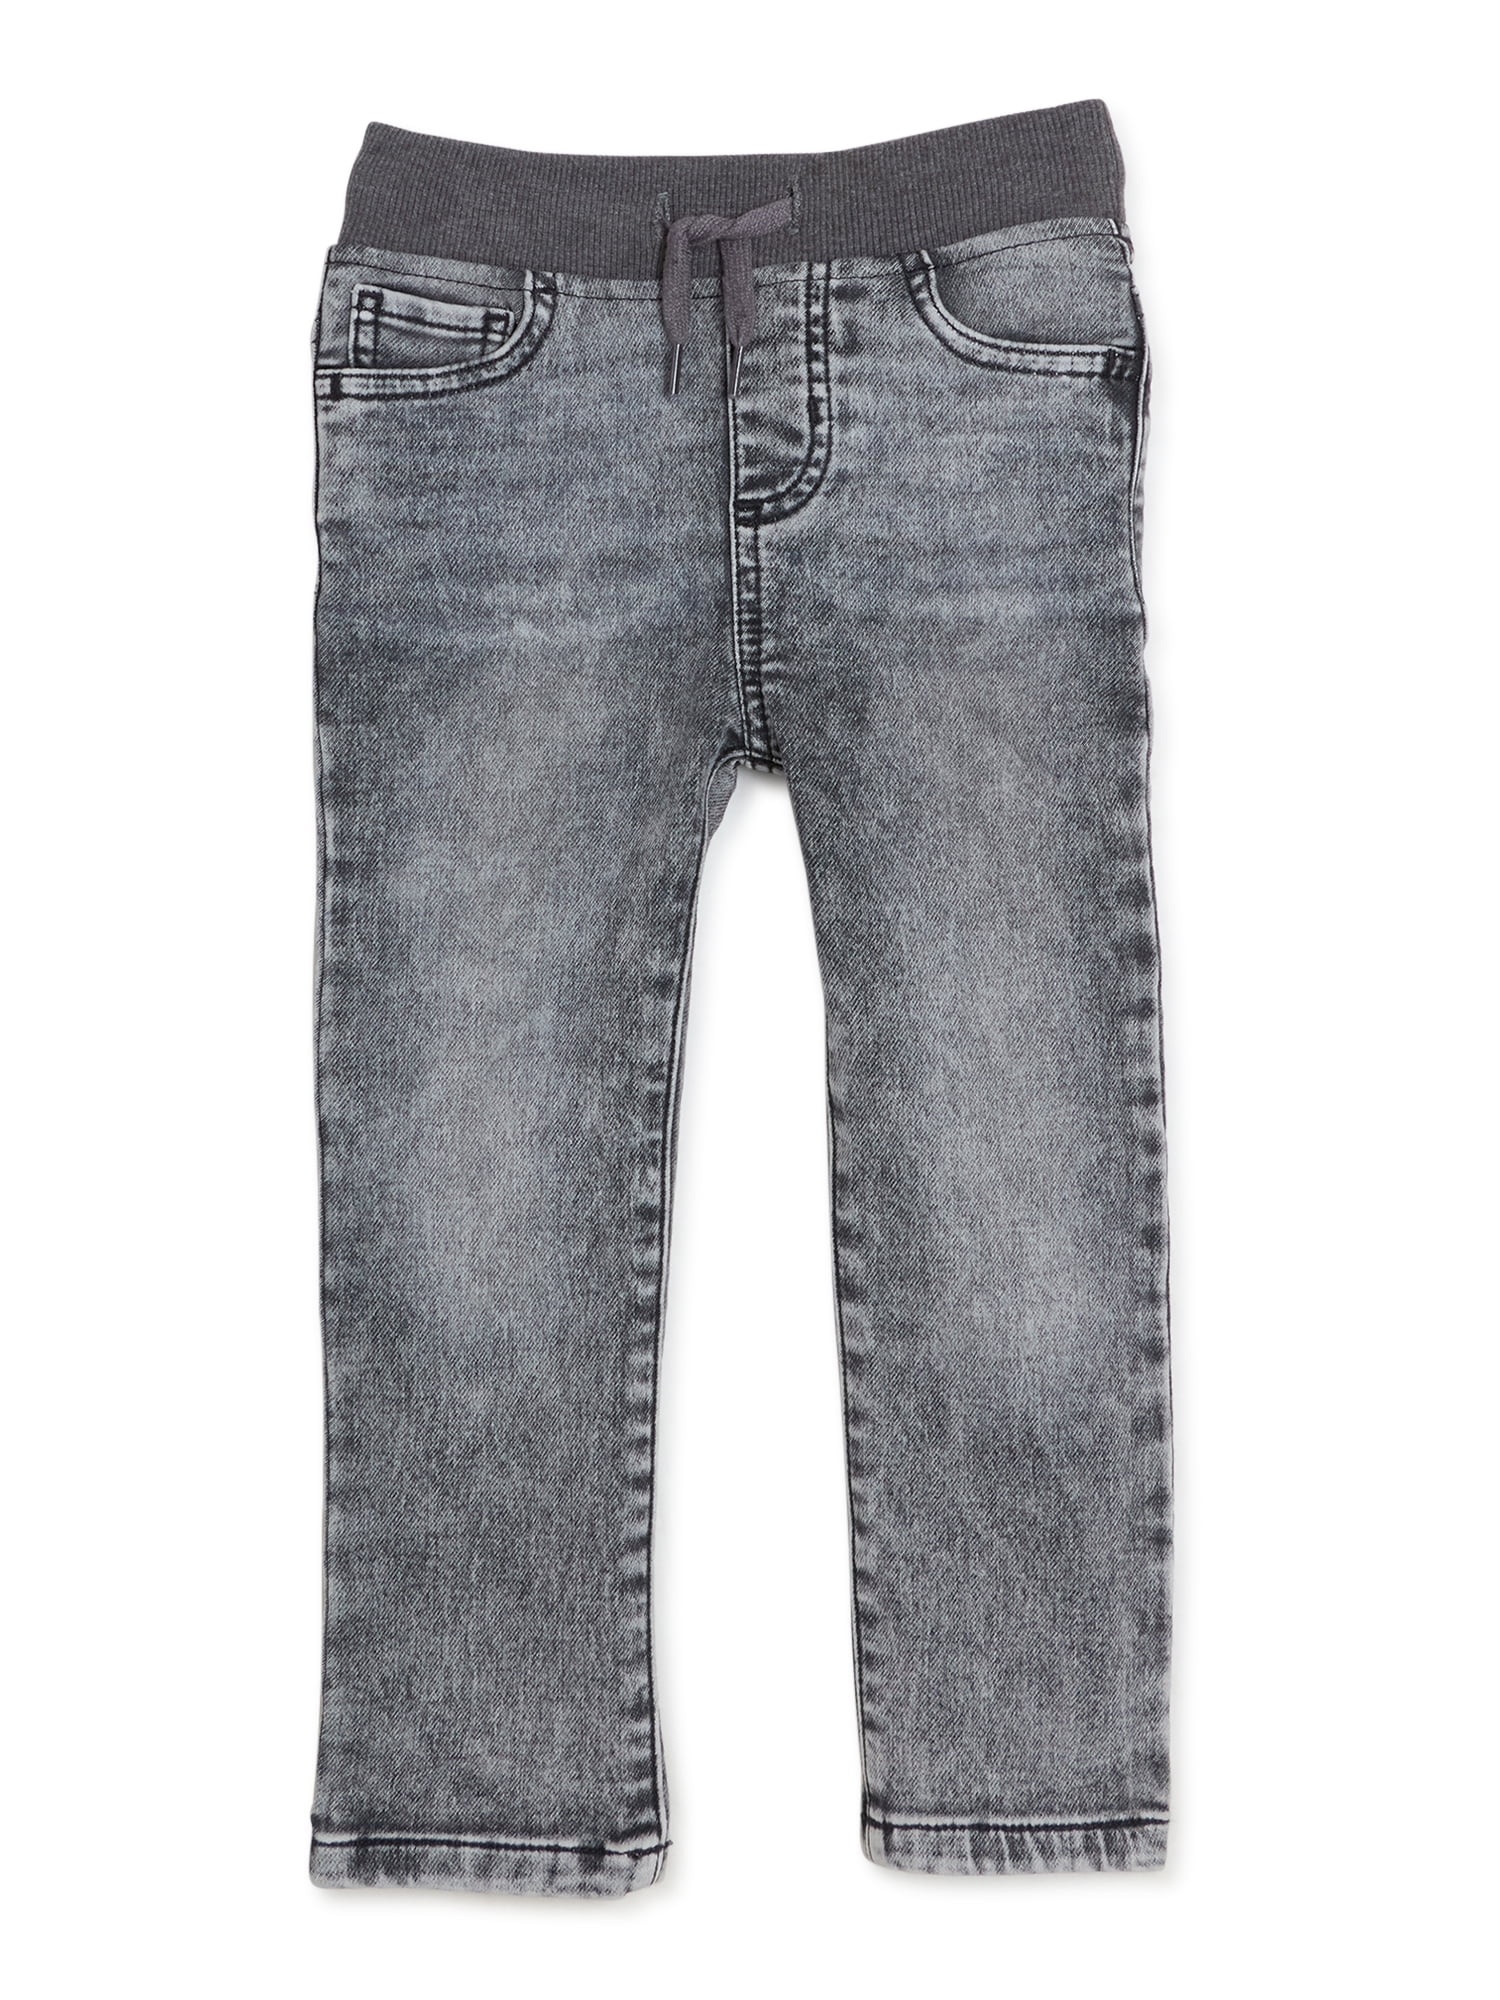 Wonder Nation Baby Toddler Boy Stretch Knit Denim Jeans with Reinforced Knees, Sizes 12M-5T - Walmart.com